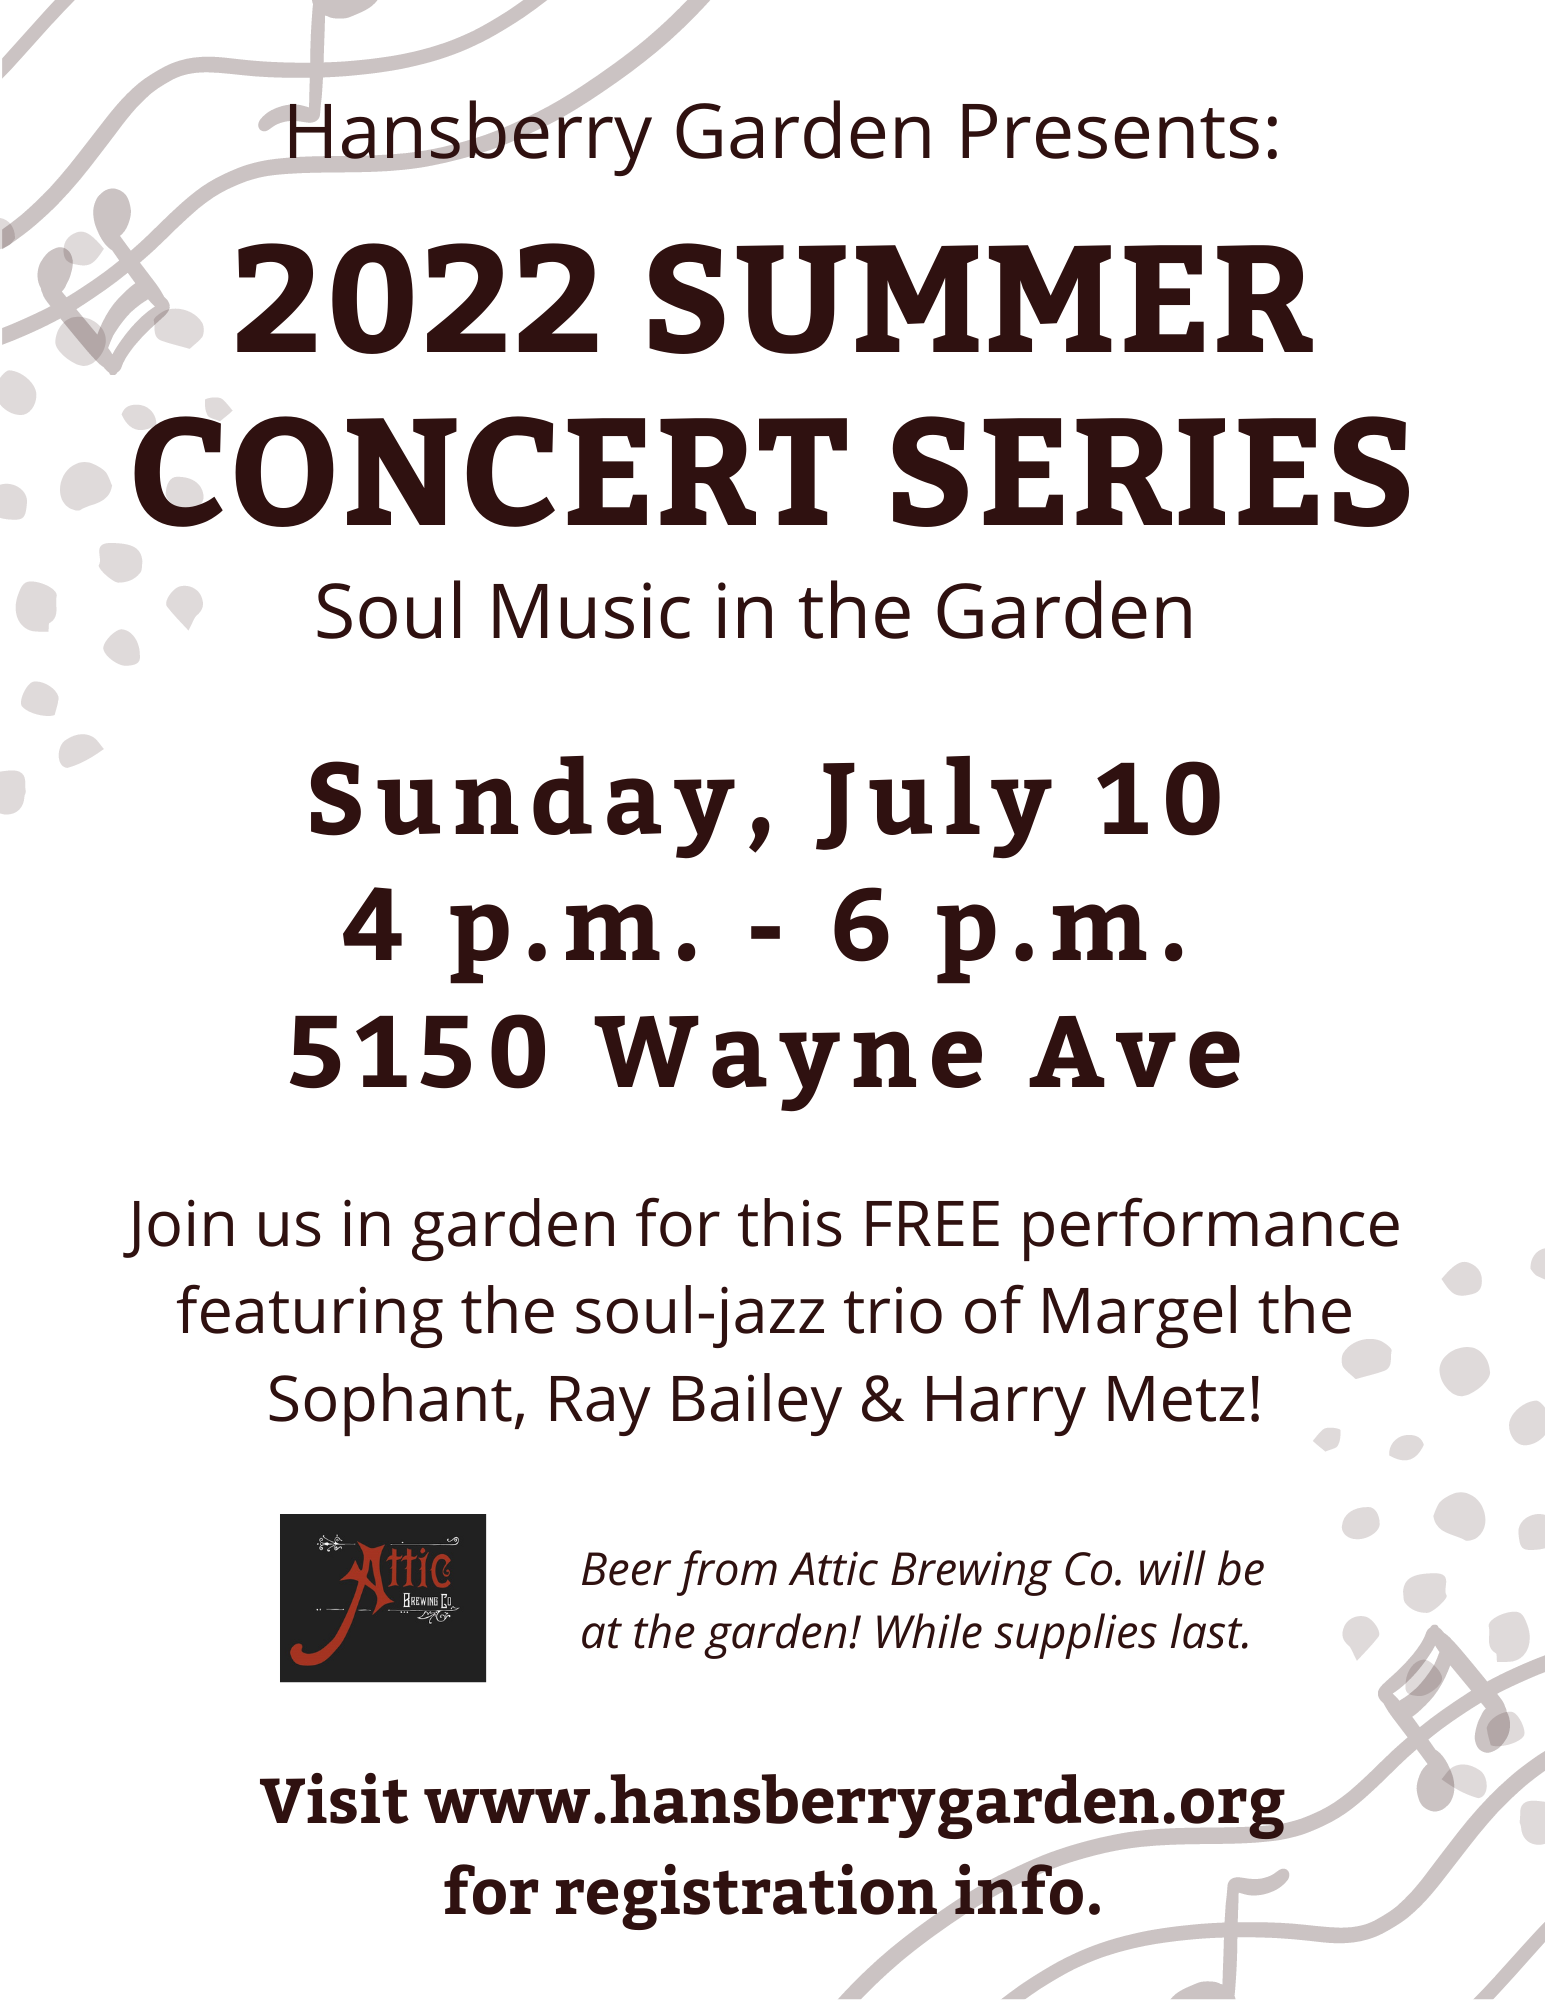 2022 Summer Concert Series. Soul Music at the Garden